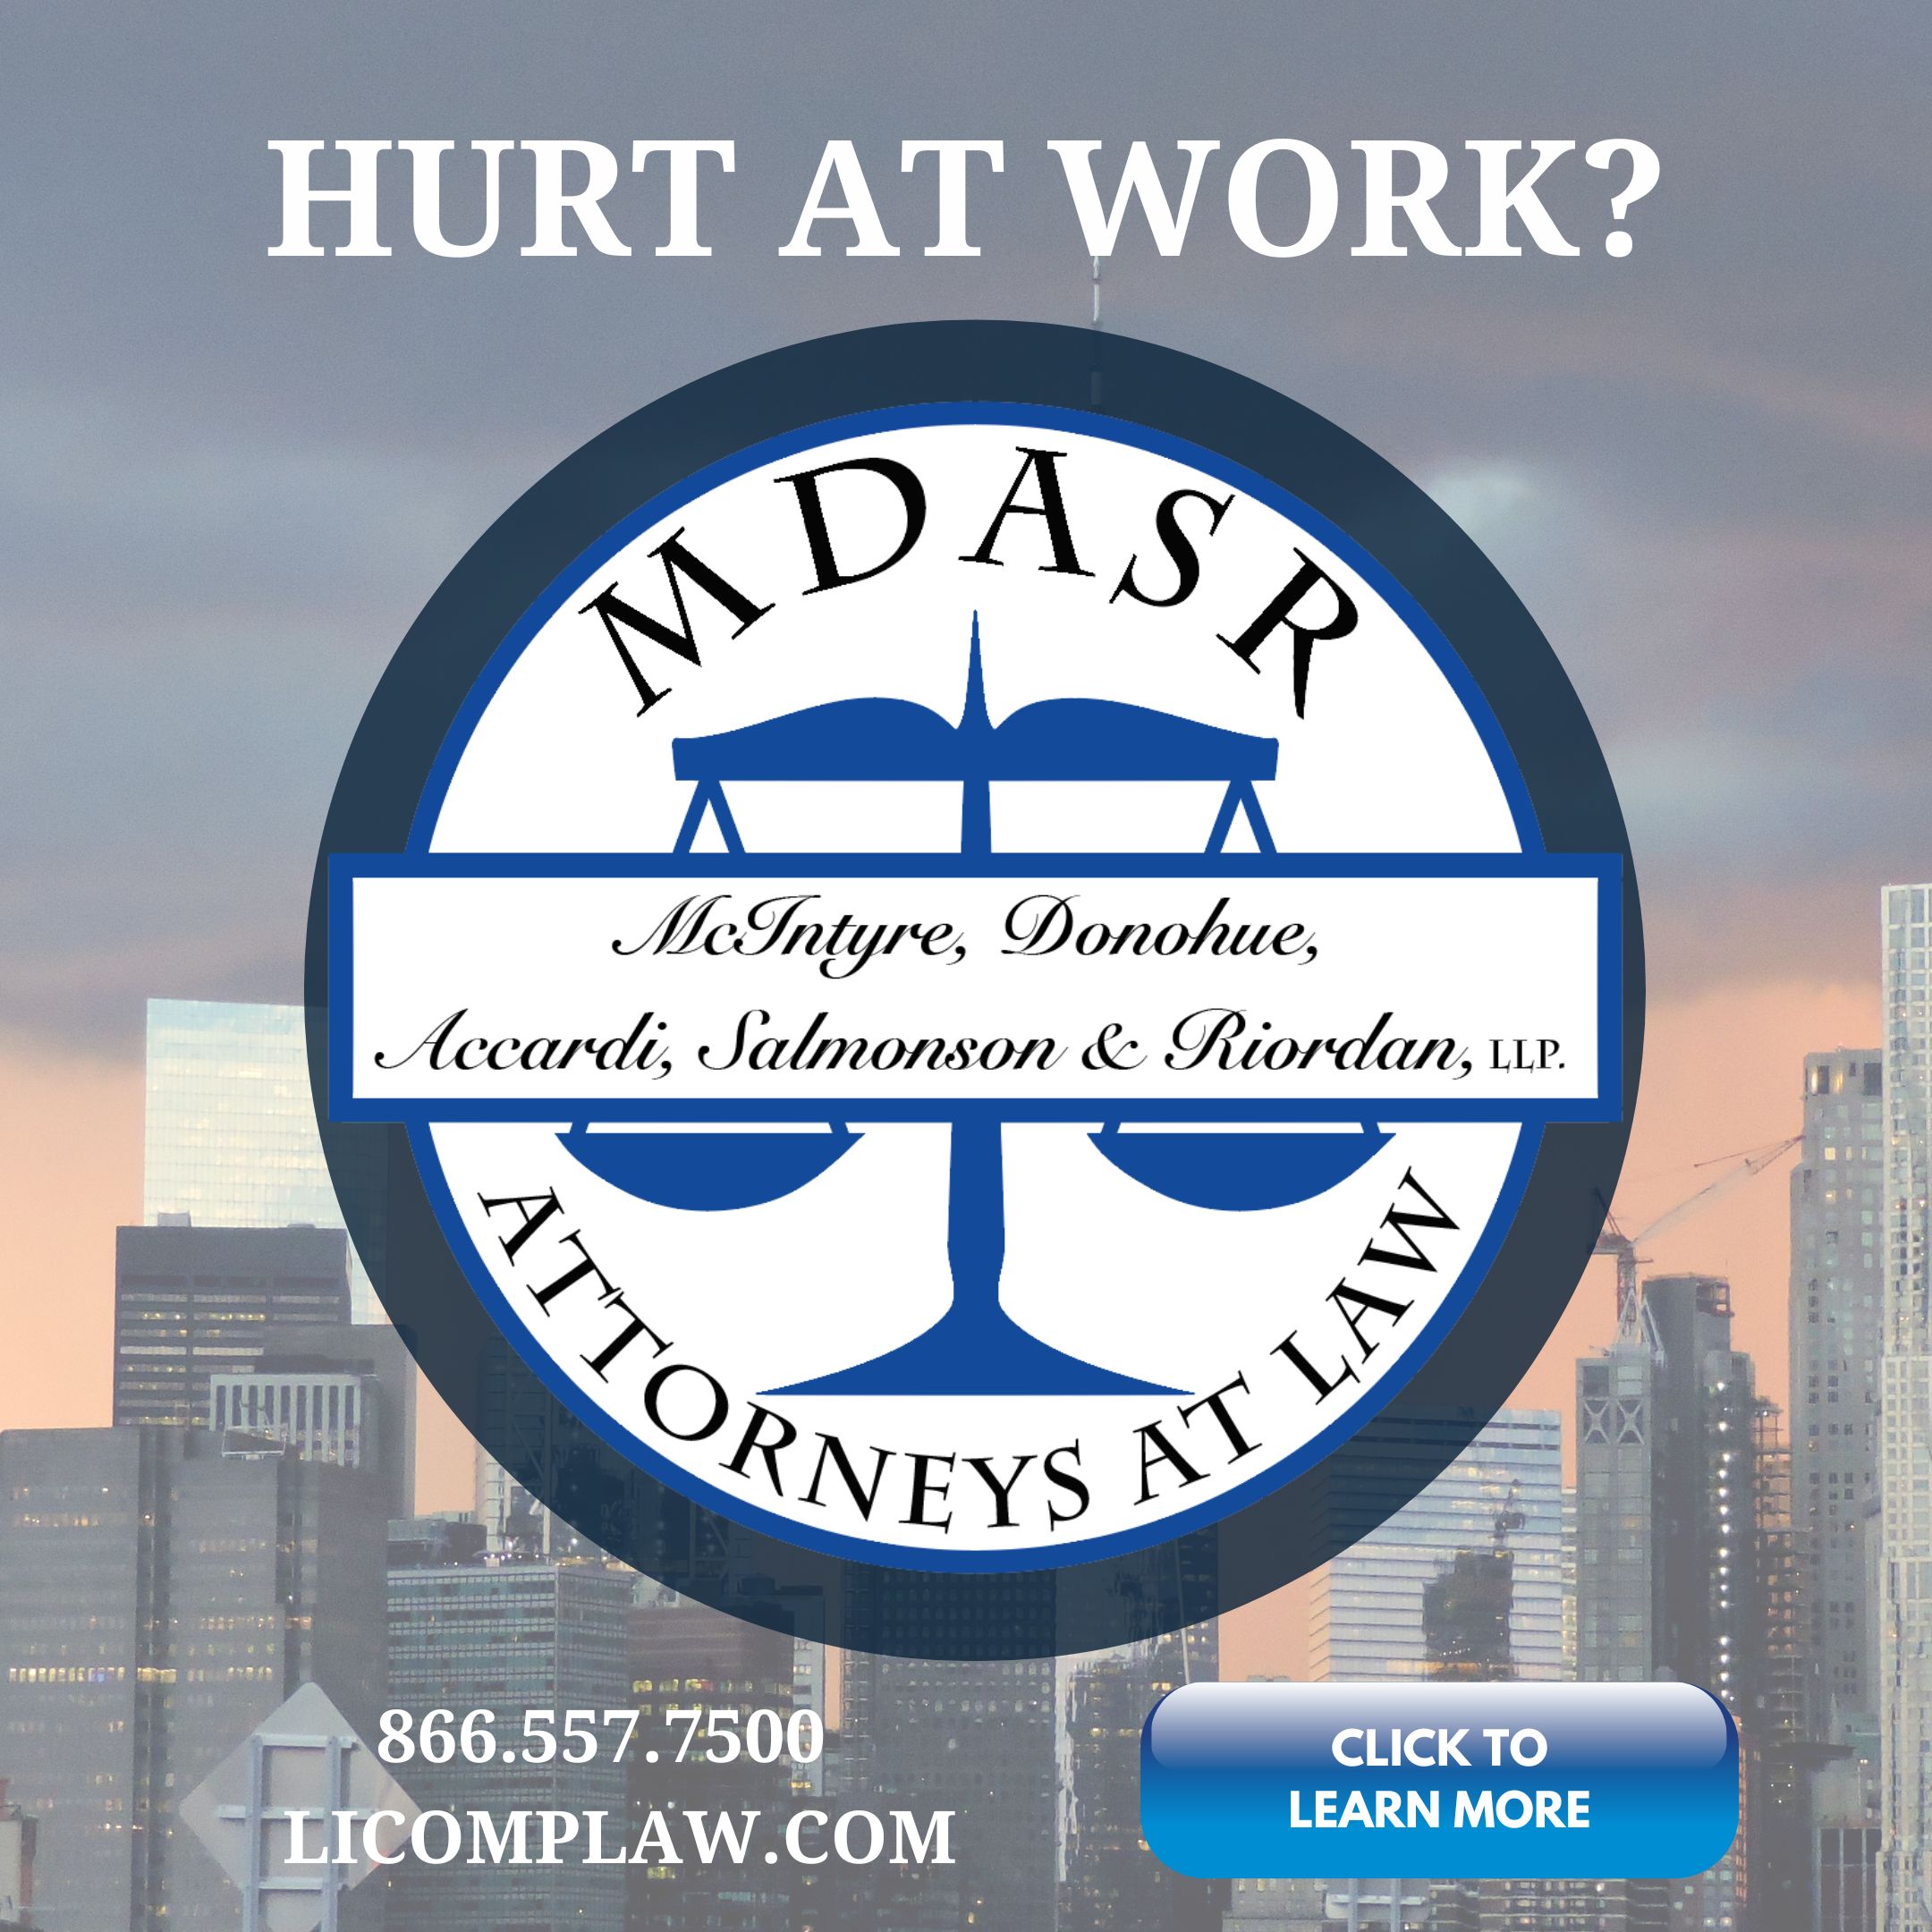 MDASR, LLP — New York and Long Island's Work Injury Law Firm